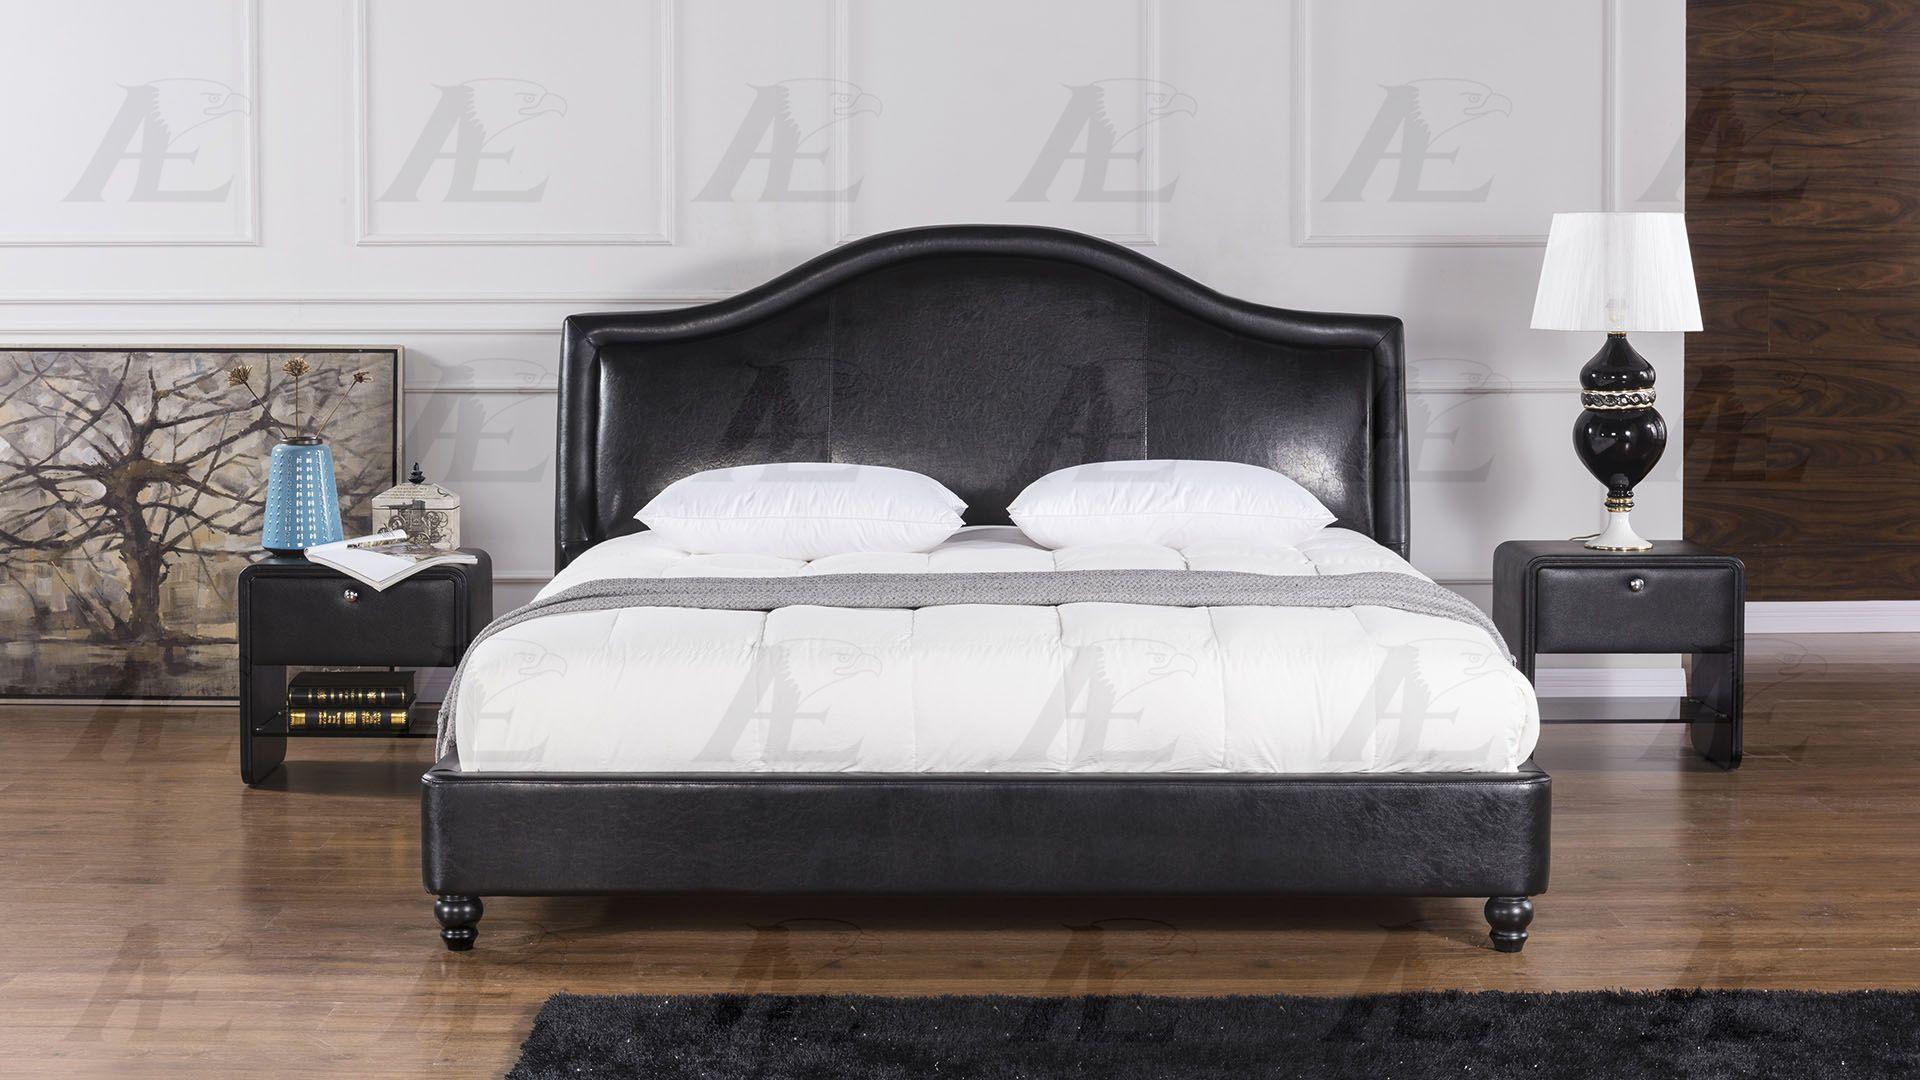 

    
AE B-D059-EK American Eagle Furniture Platform Bed
